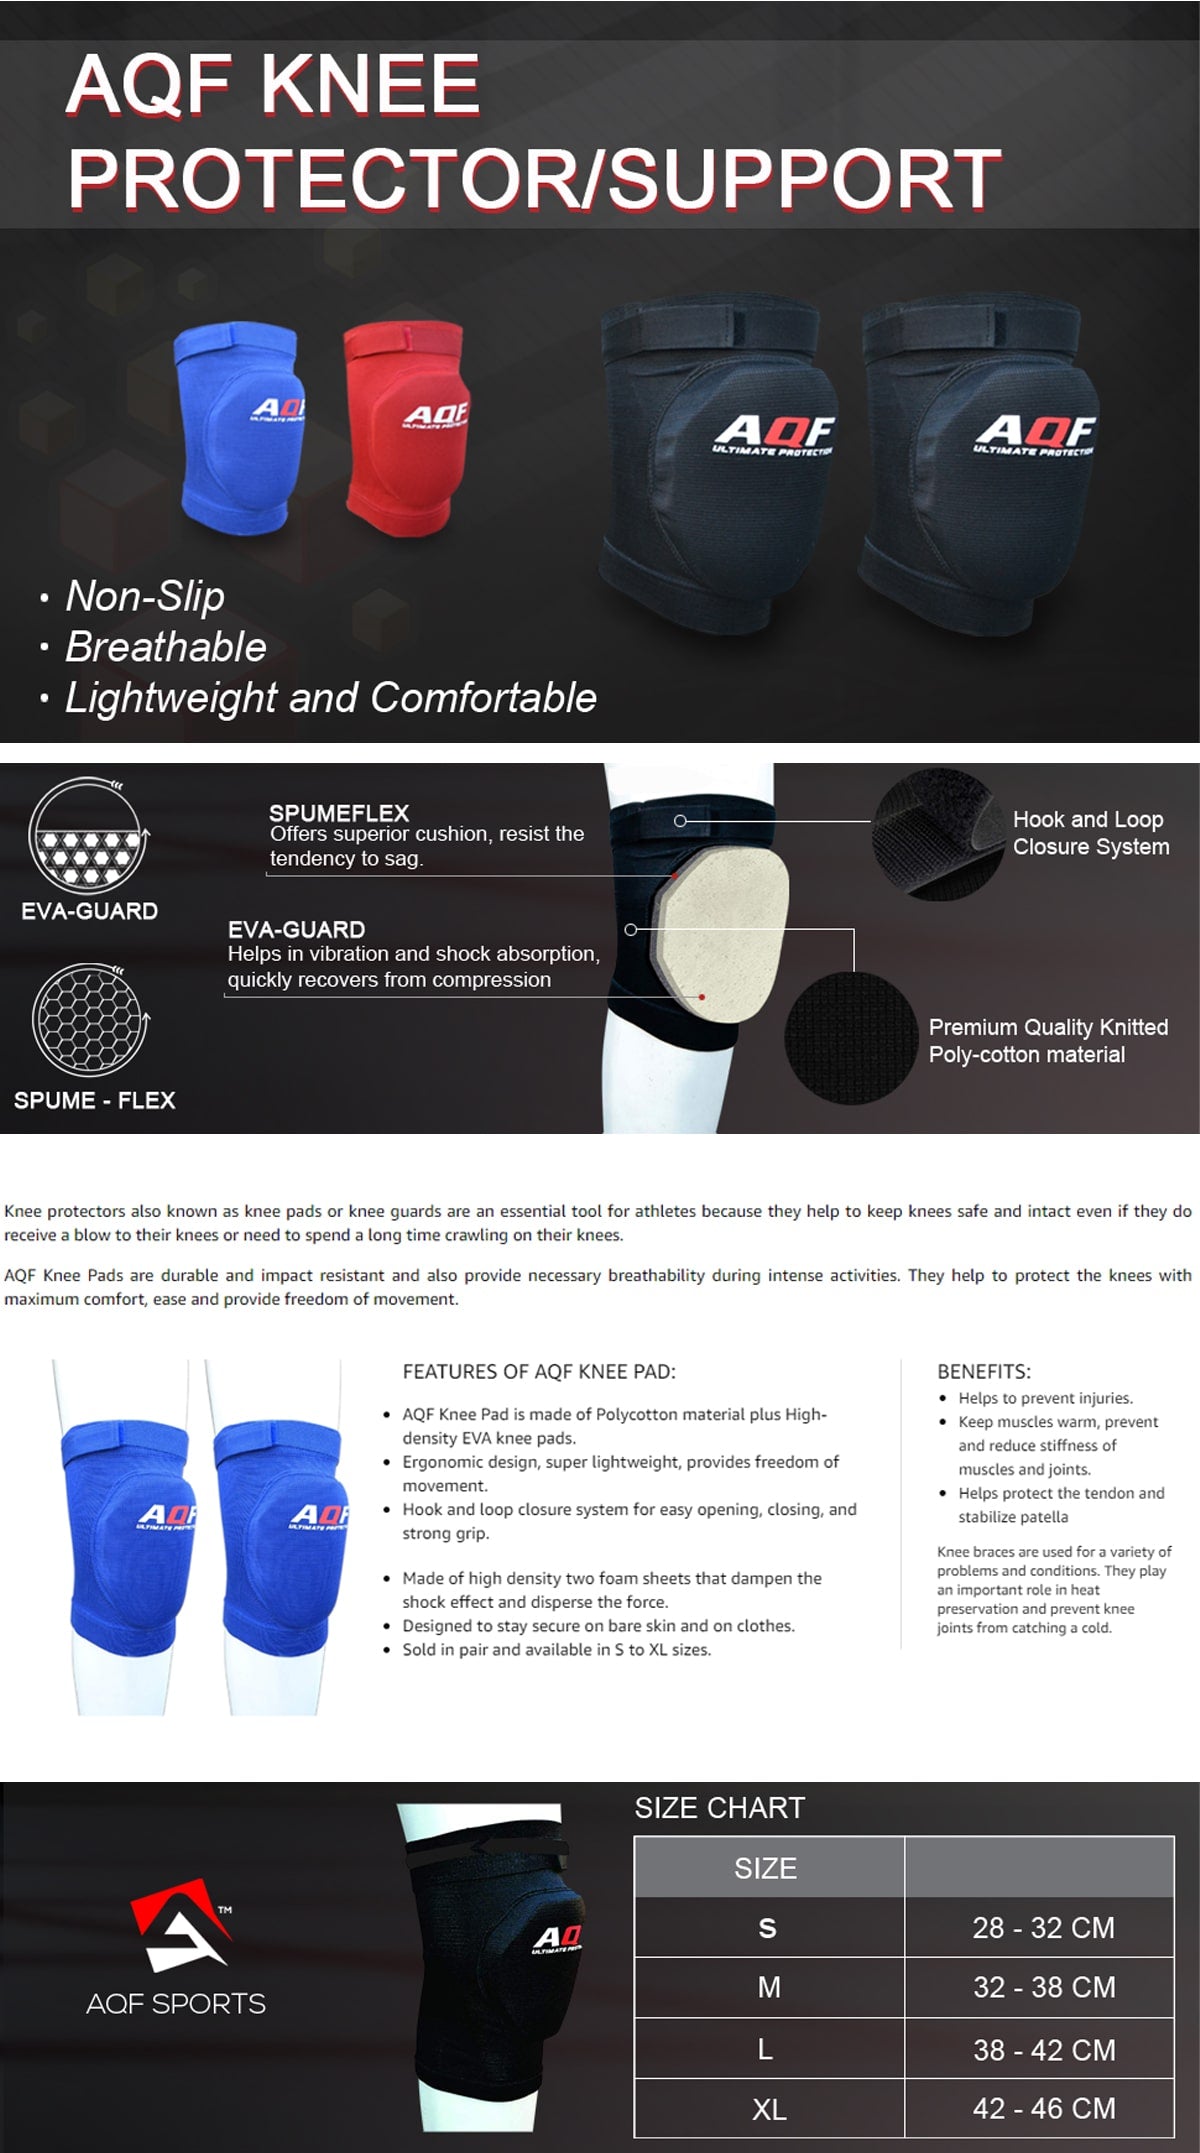 Features of AQF Knee Pad Protectors